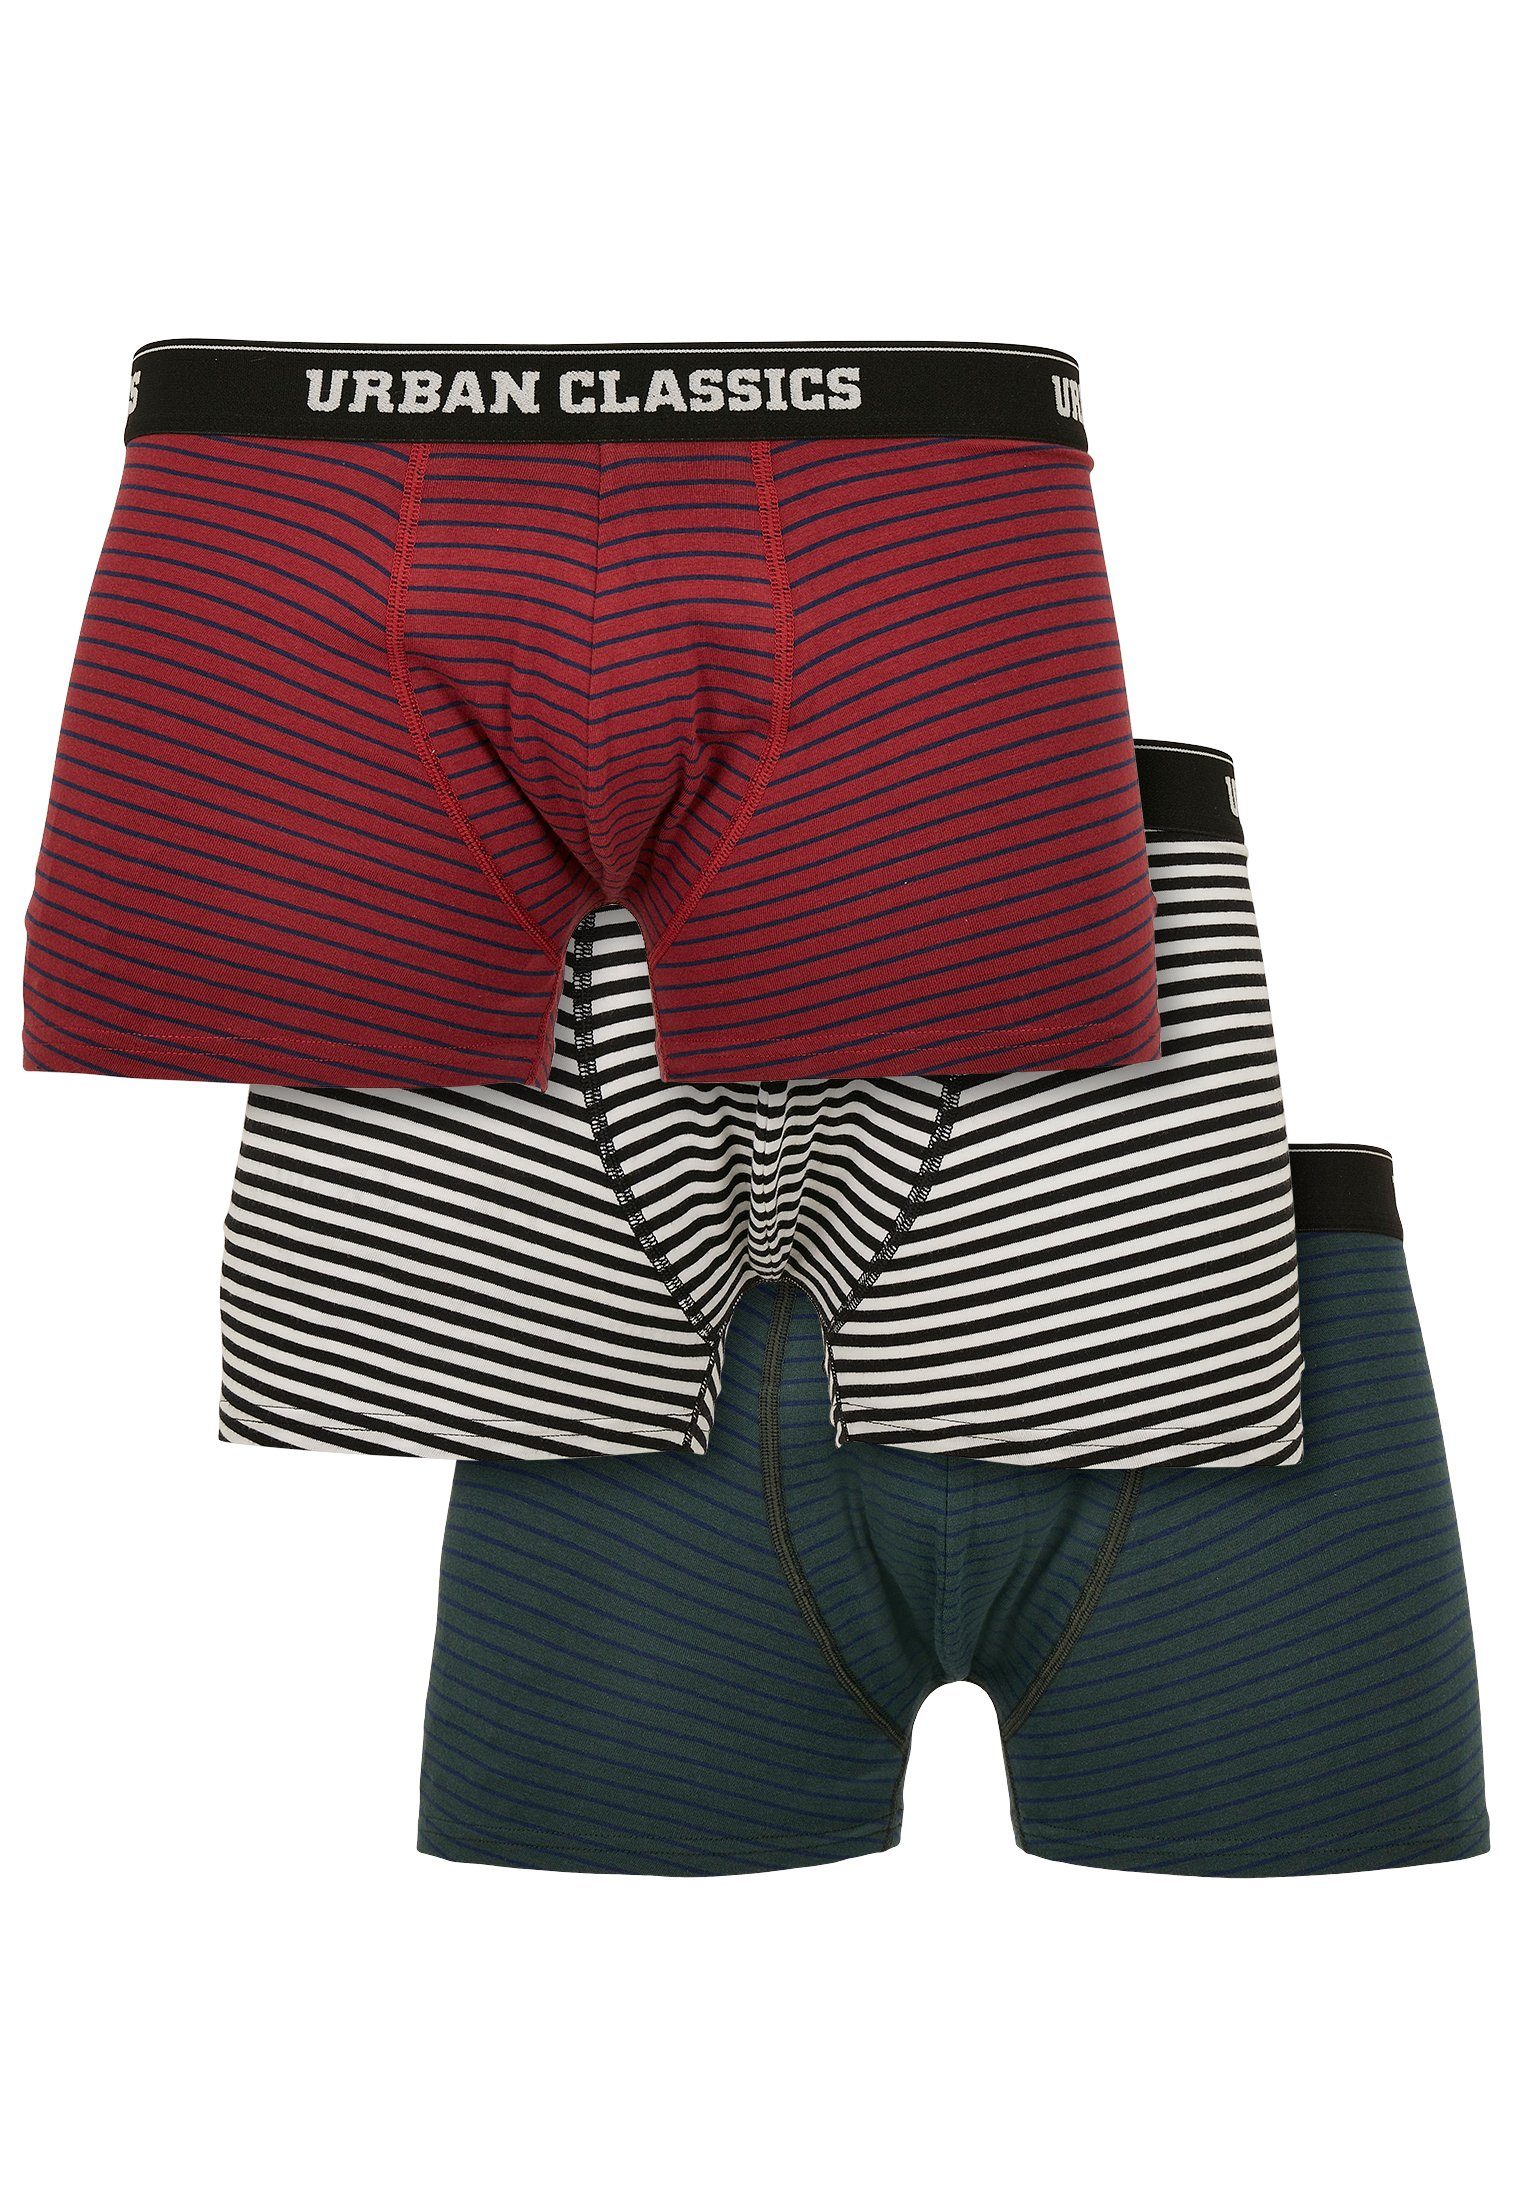 URBAN CLASSICS Boxershorts Männer Boxer Shorts 3-Pack (1-St), Urban  Classics Plus Size